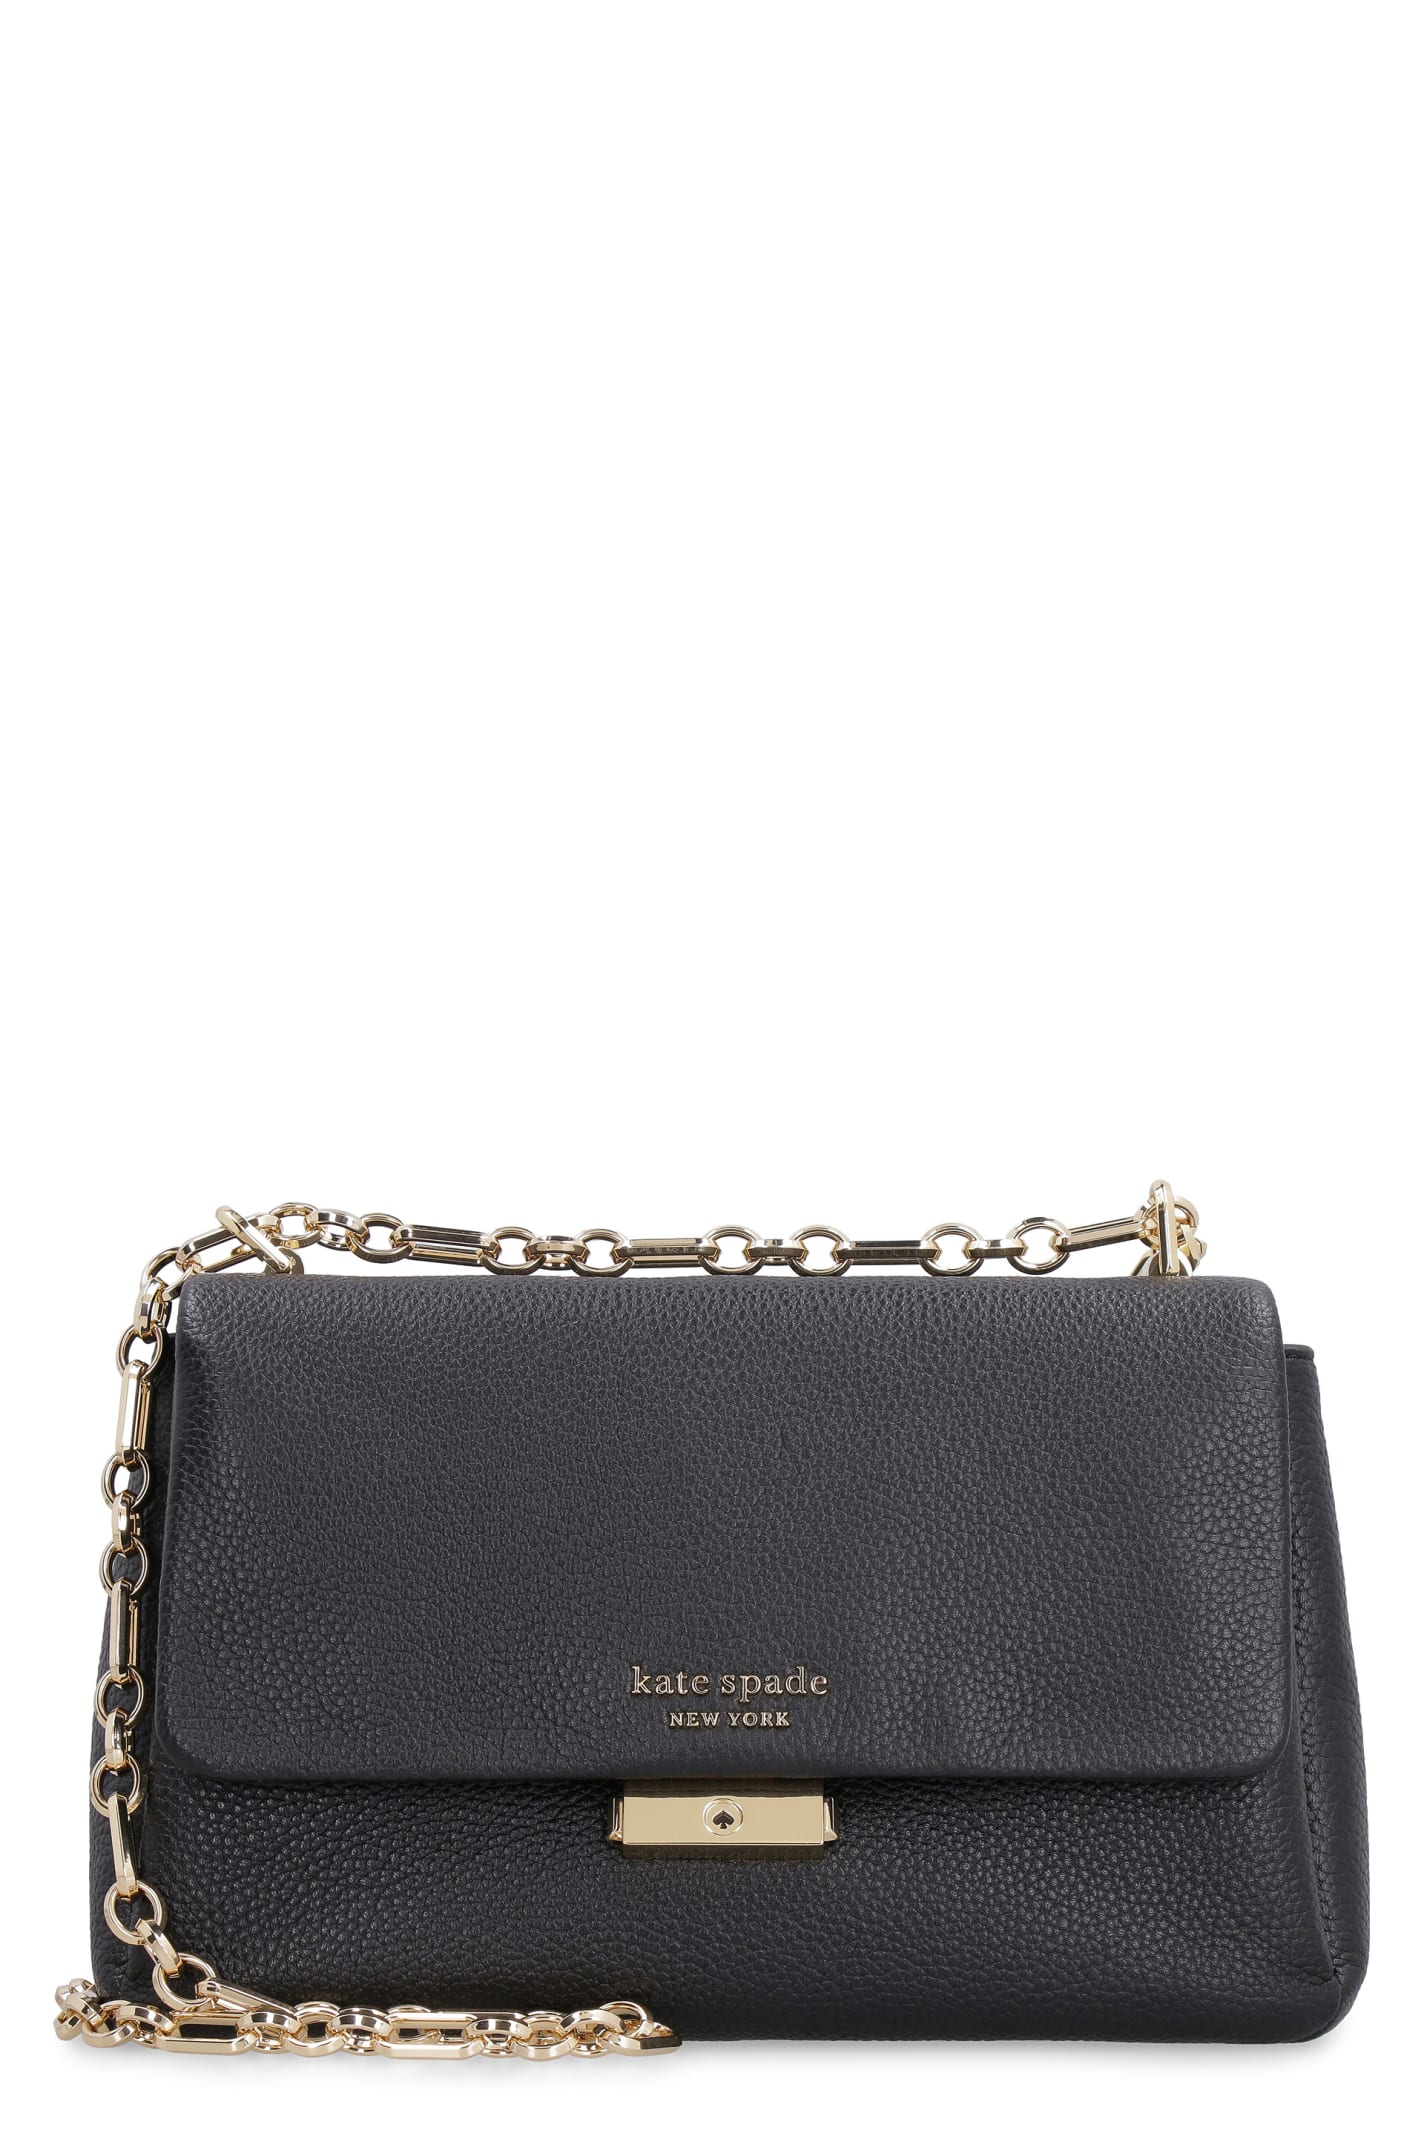 Kate Spade Carlyle Pebbled Leather Handbag